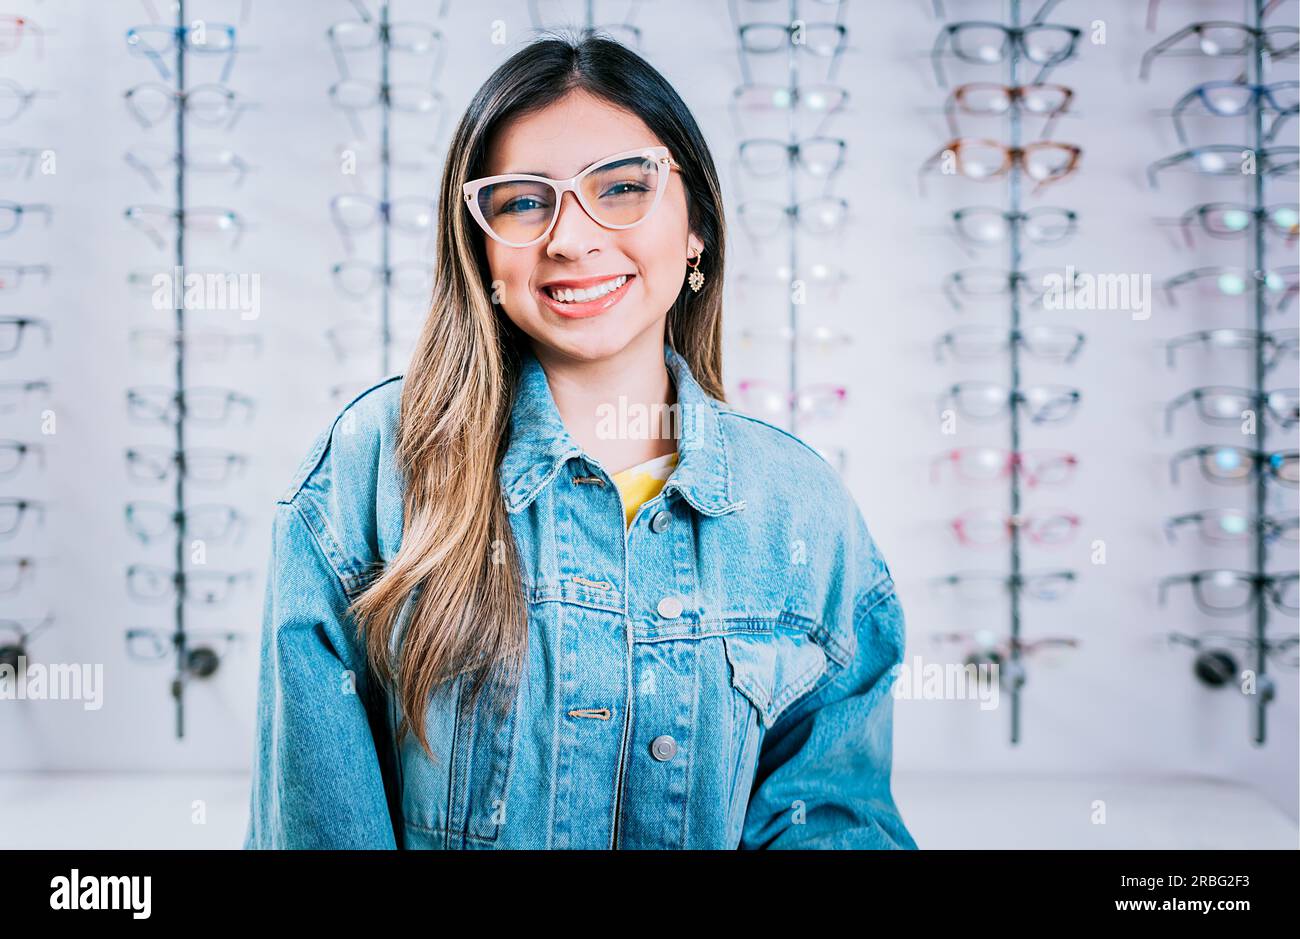 Smiling happy girl in eyeglasses with store eyeglasses background, Portrait of happy girl in glasses in an eyeglasses store Stock Photo